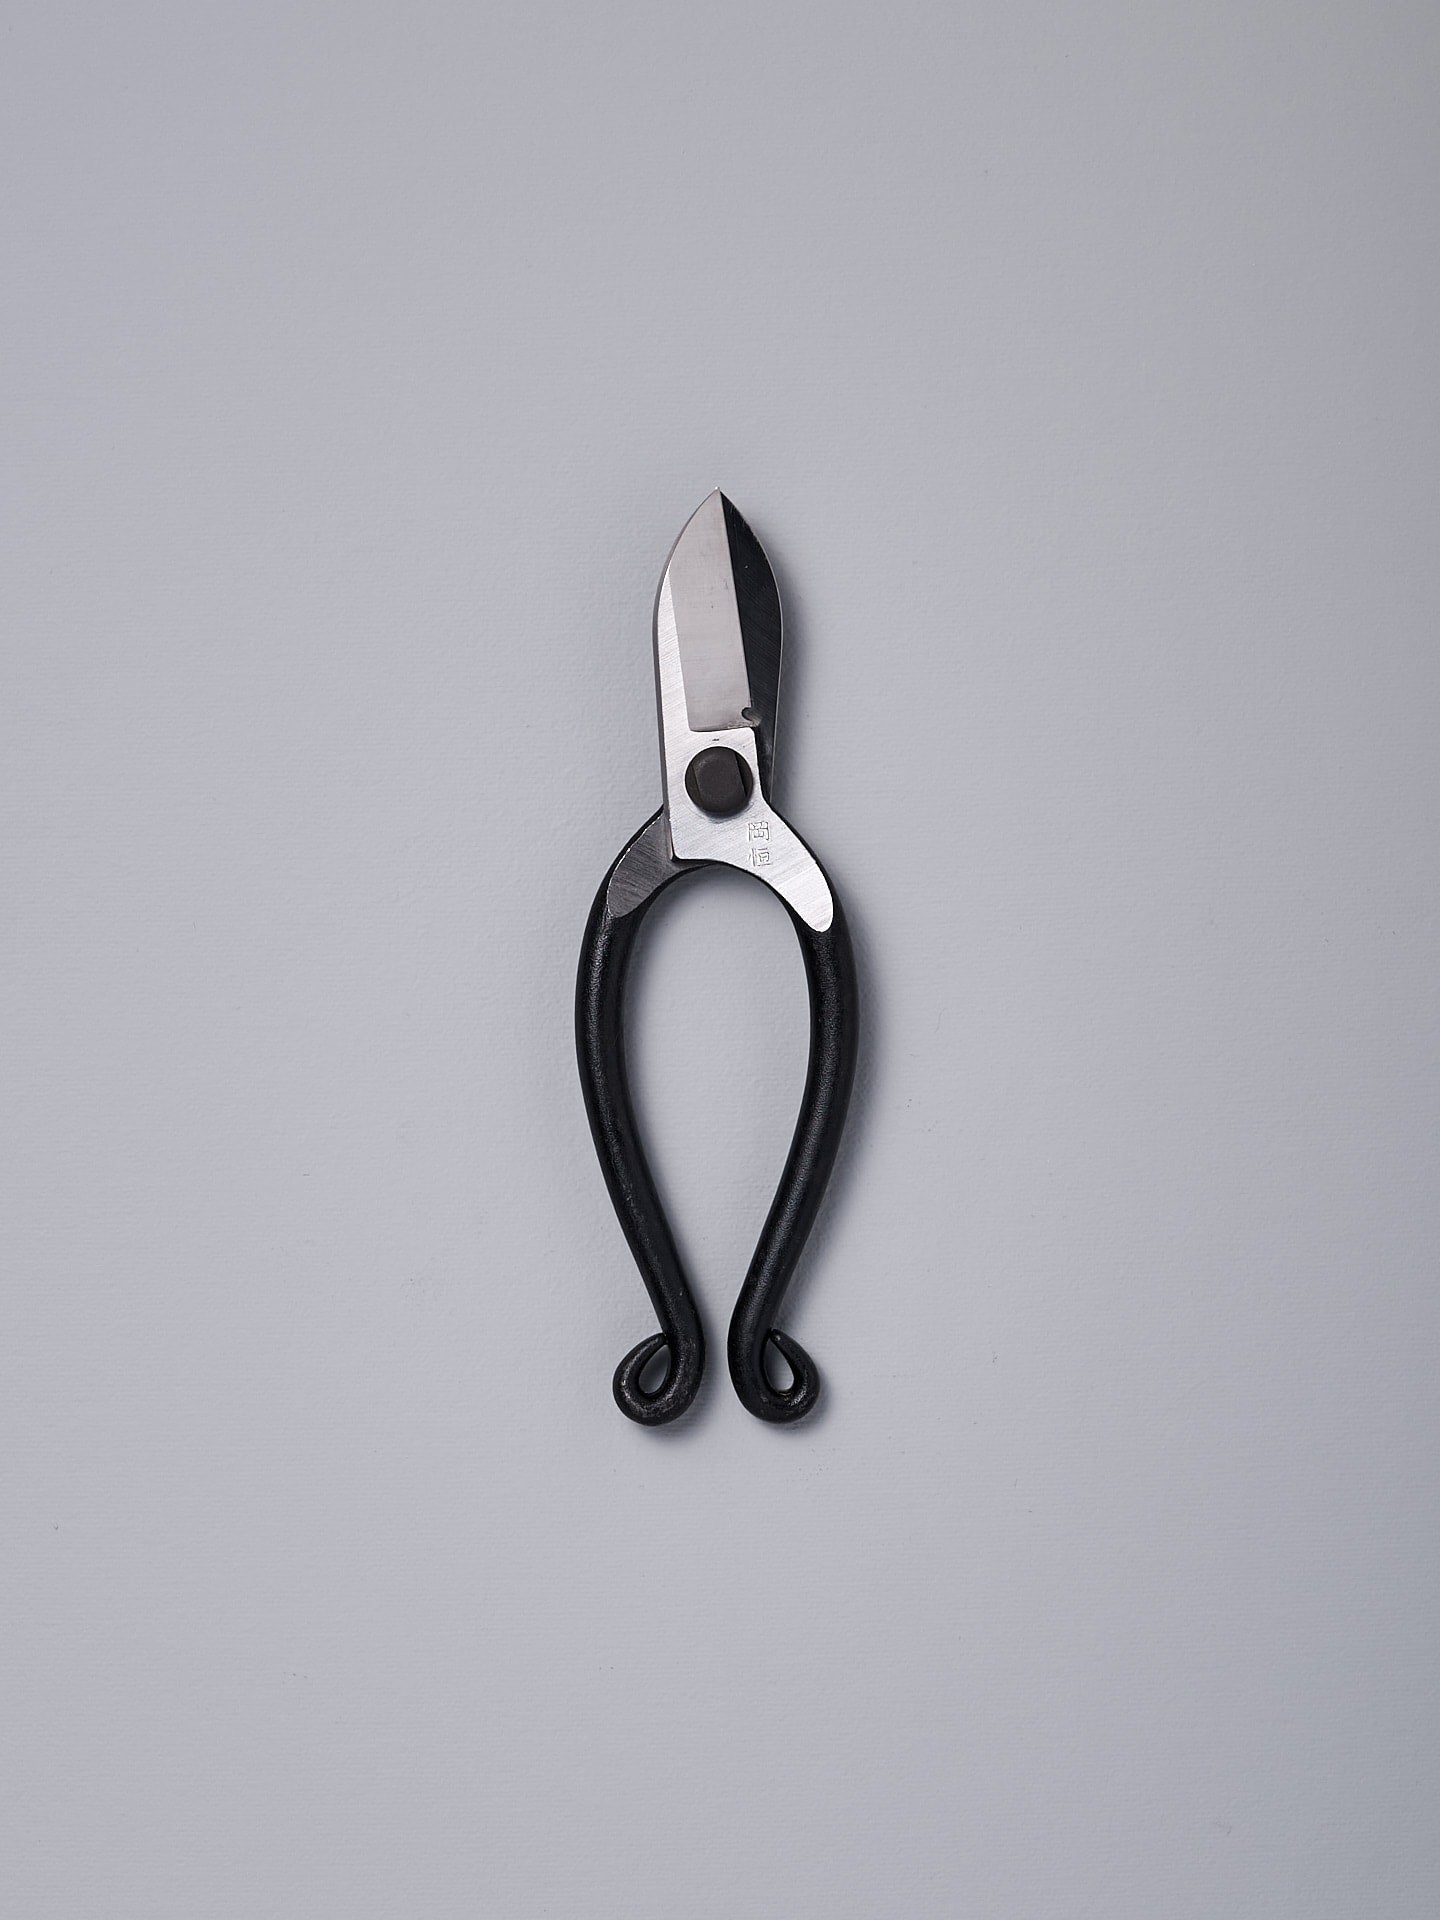 An Okatsune Ikebana Scissors №213 on a white background.